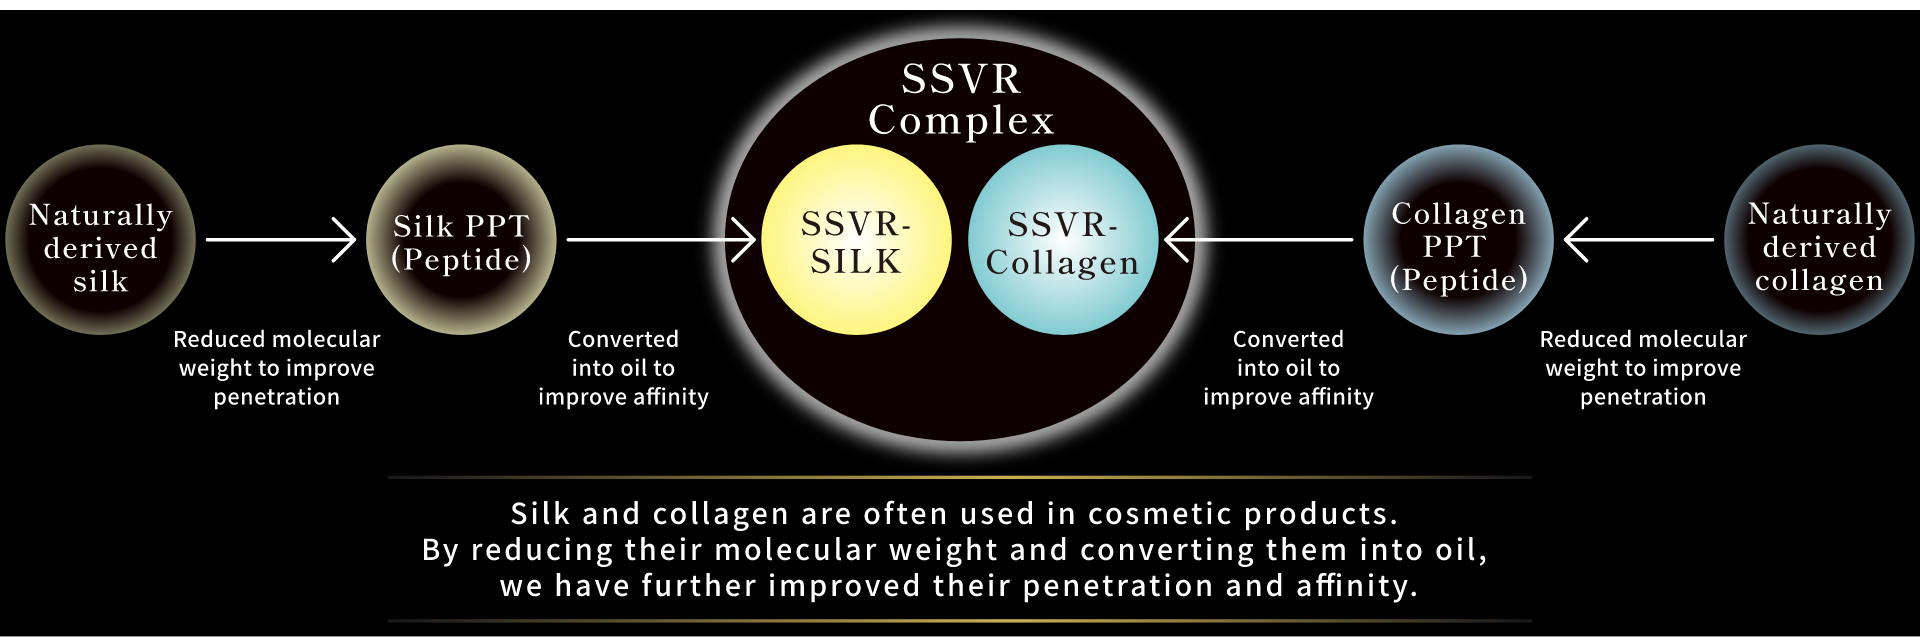 SSVR Complex